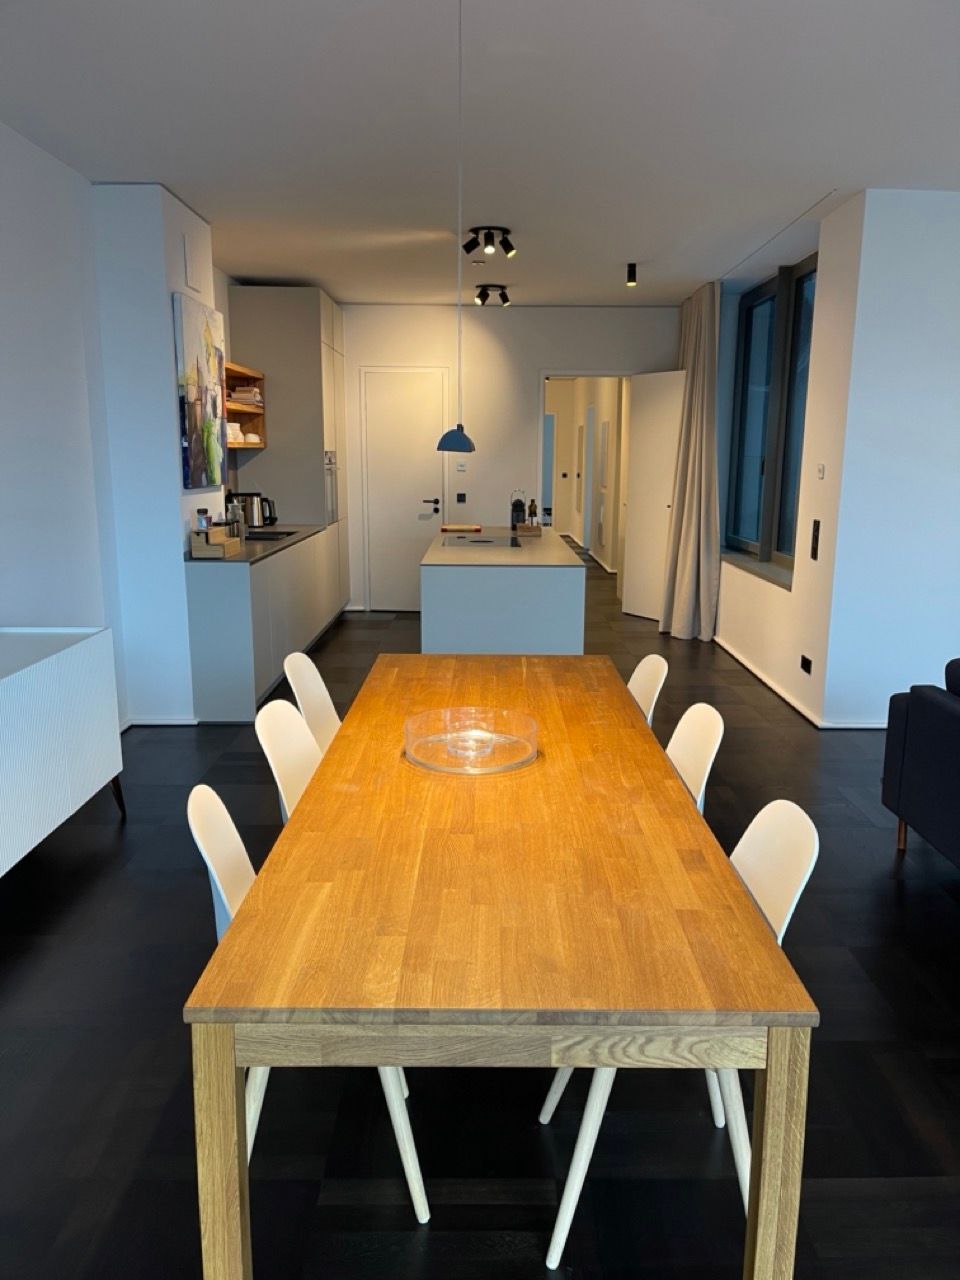 Brand new Luxury furnished apartment in Prenzlauer Berg/Mitte Berlin